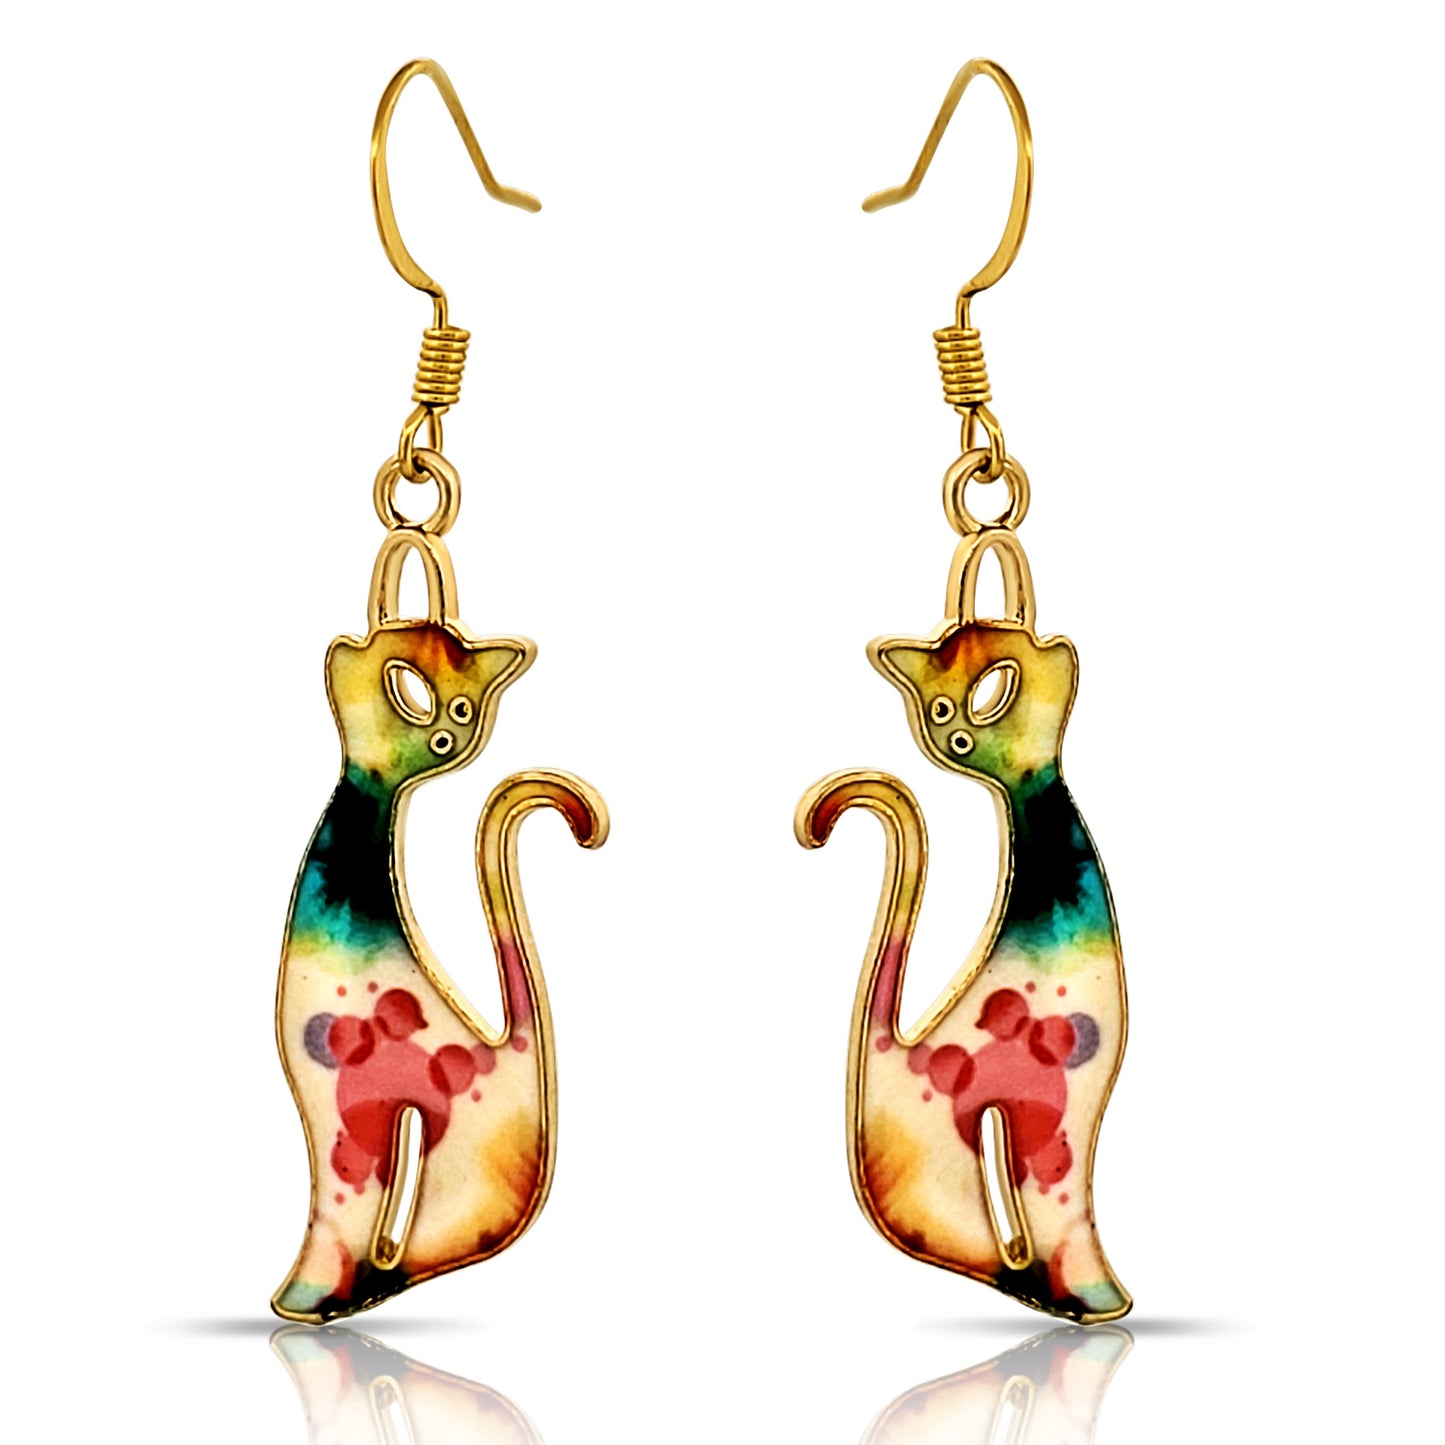 BESHEEK Goldtone Colorful Kitty Cat Dangle Earrings | Hypoallergenic Boho Kitchsy Artistic Animal Cute Style Fashion Earrings